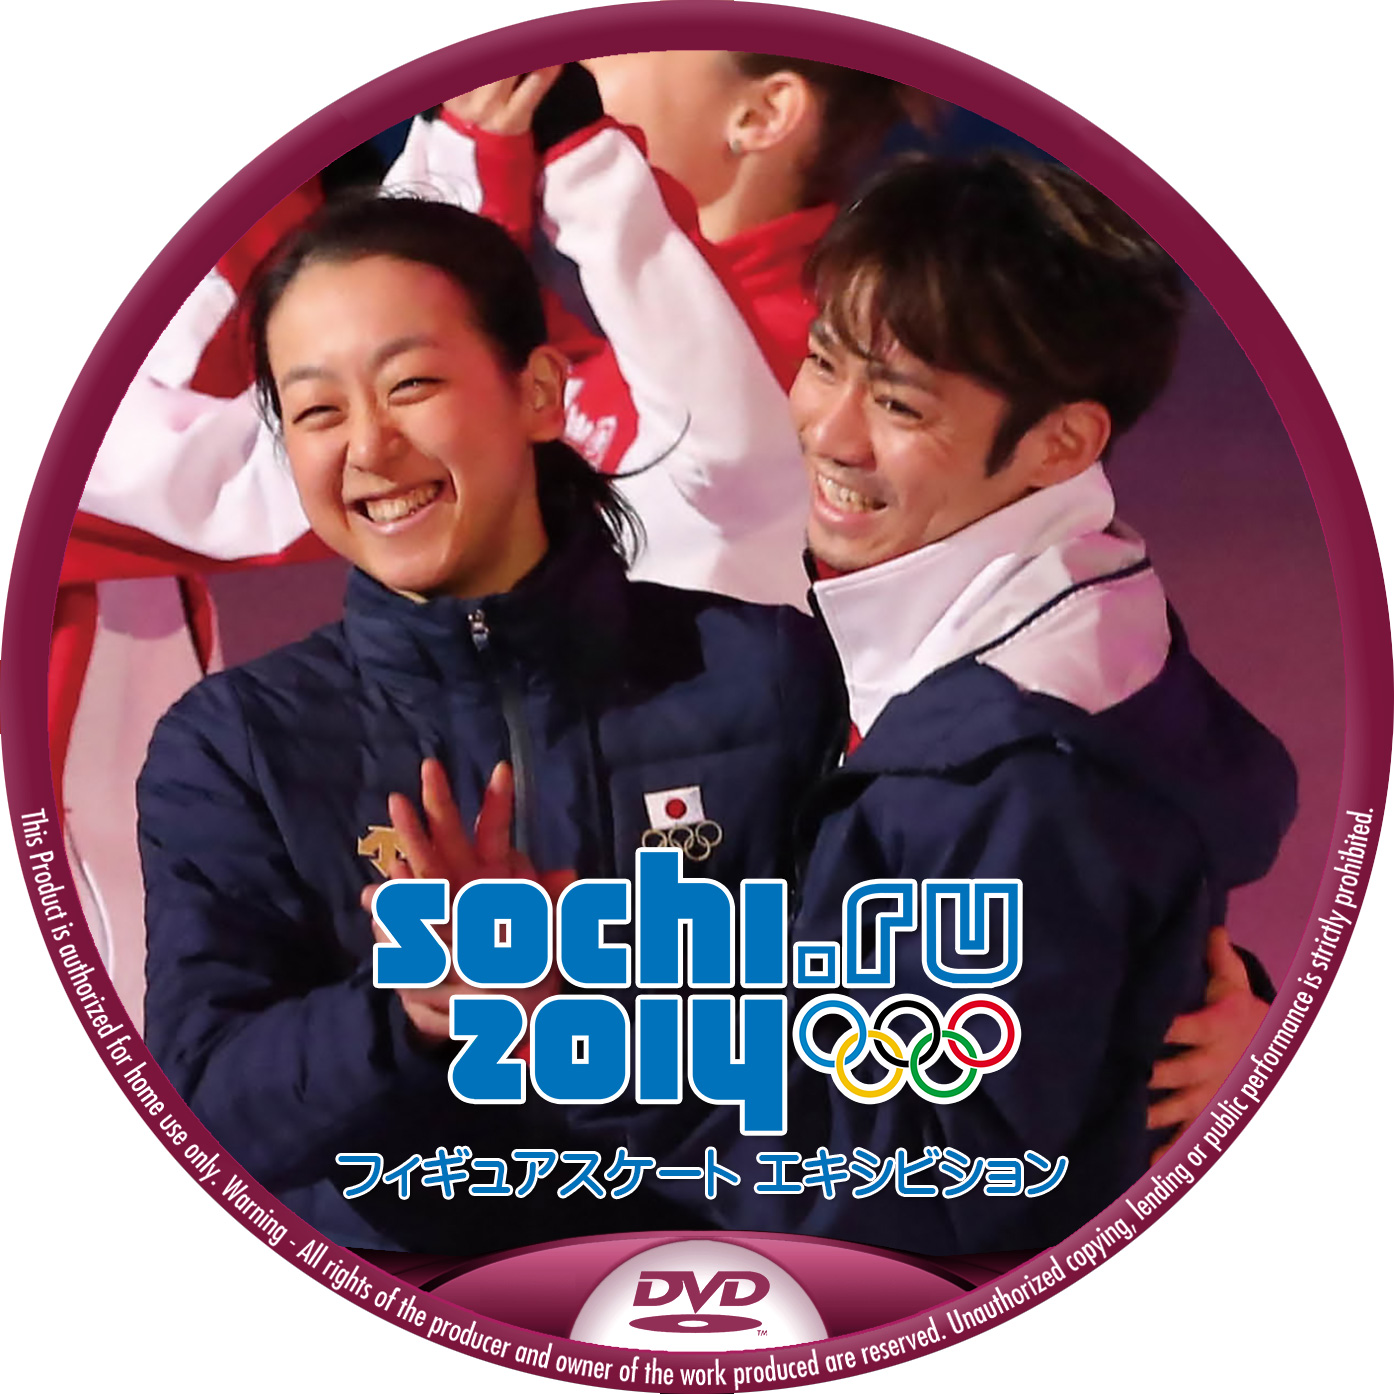 Sochi_Figure_Exhibition-DVD3